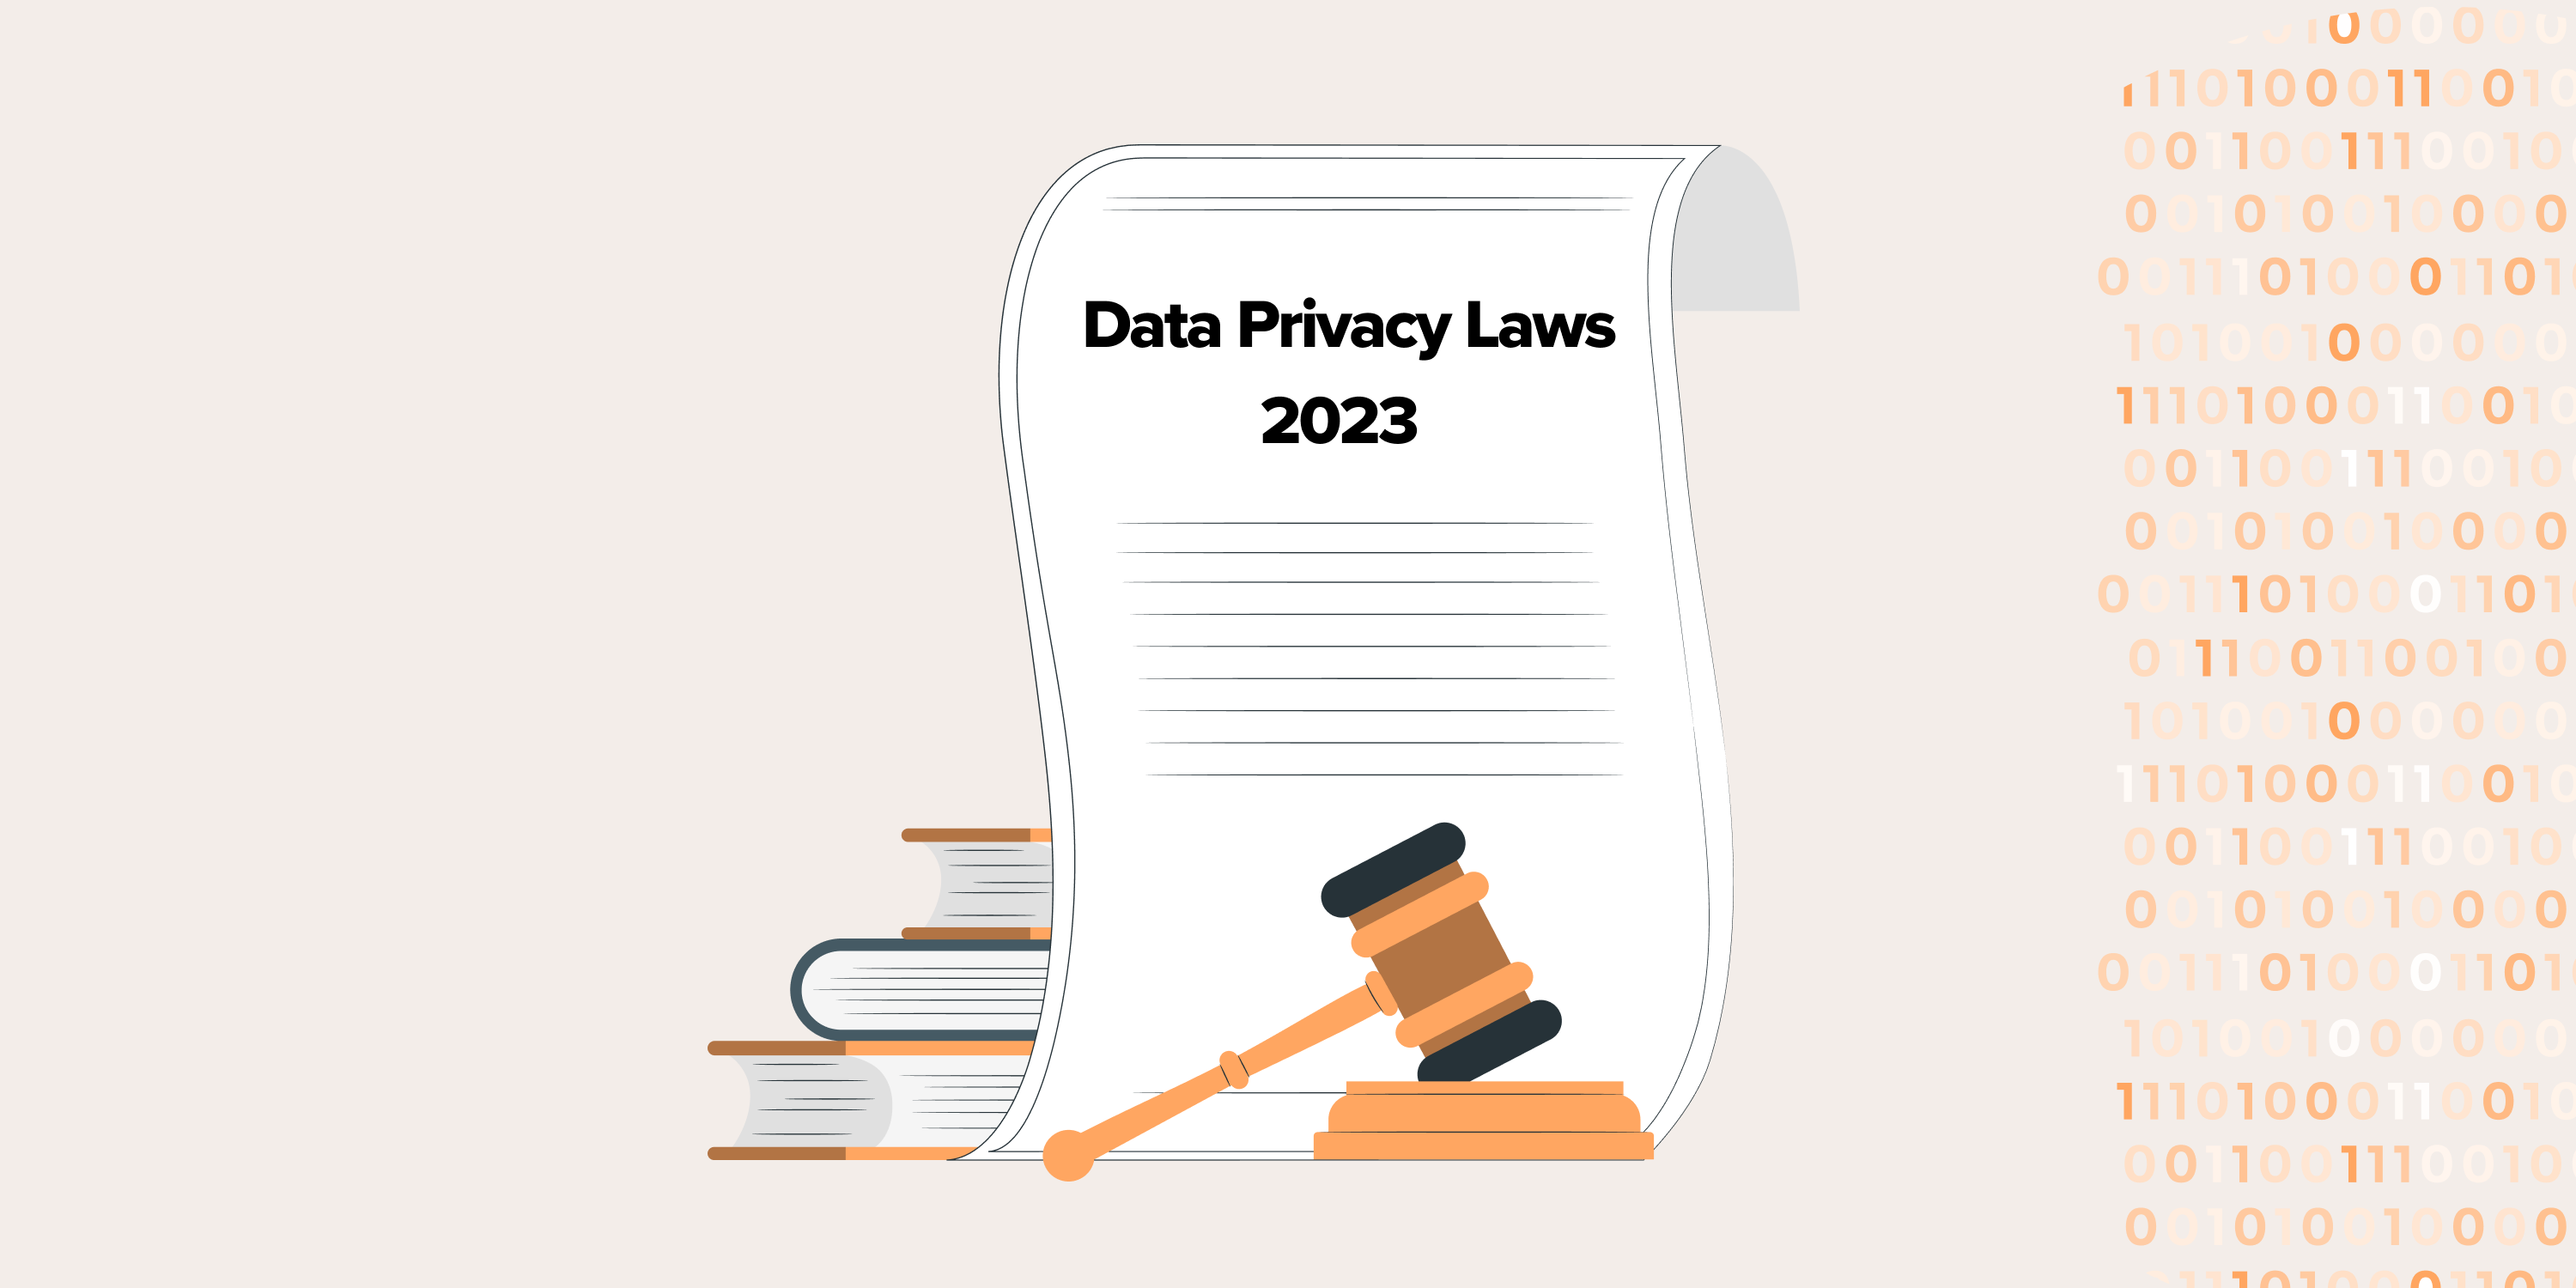 Data Privacy Laws in 2023